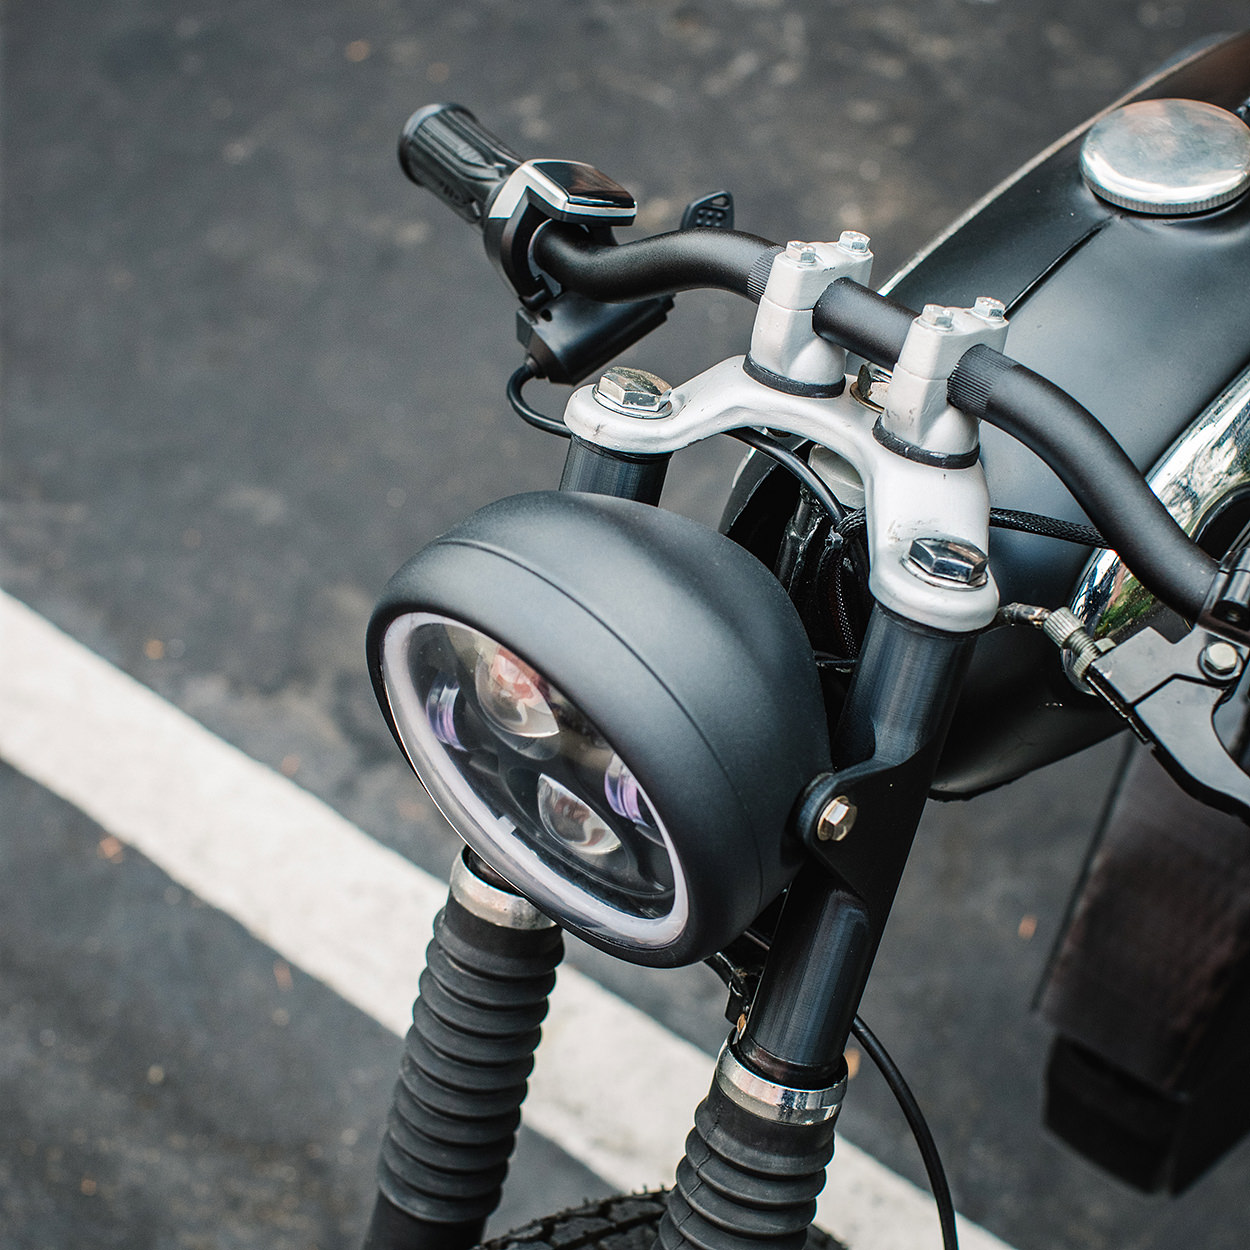 The electric moped that won a global bike build off: Aaron Laniosz's Honda S90